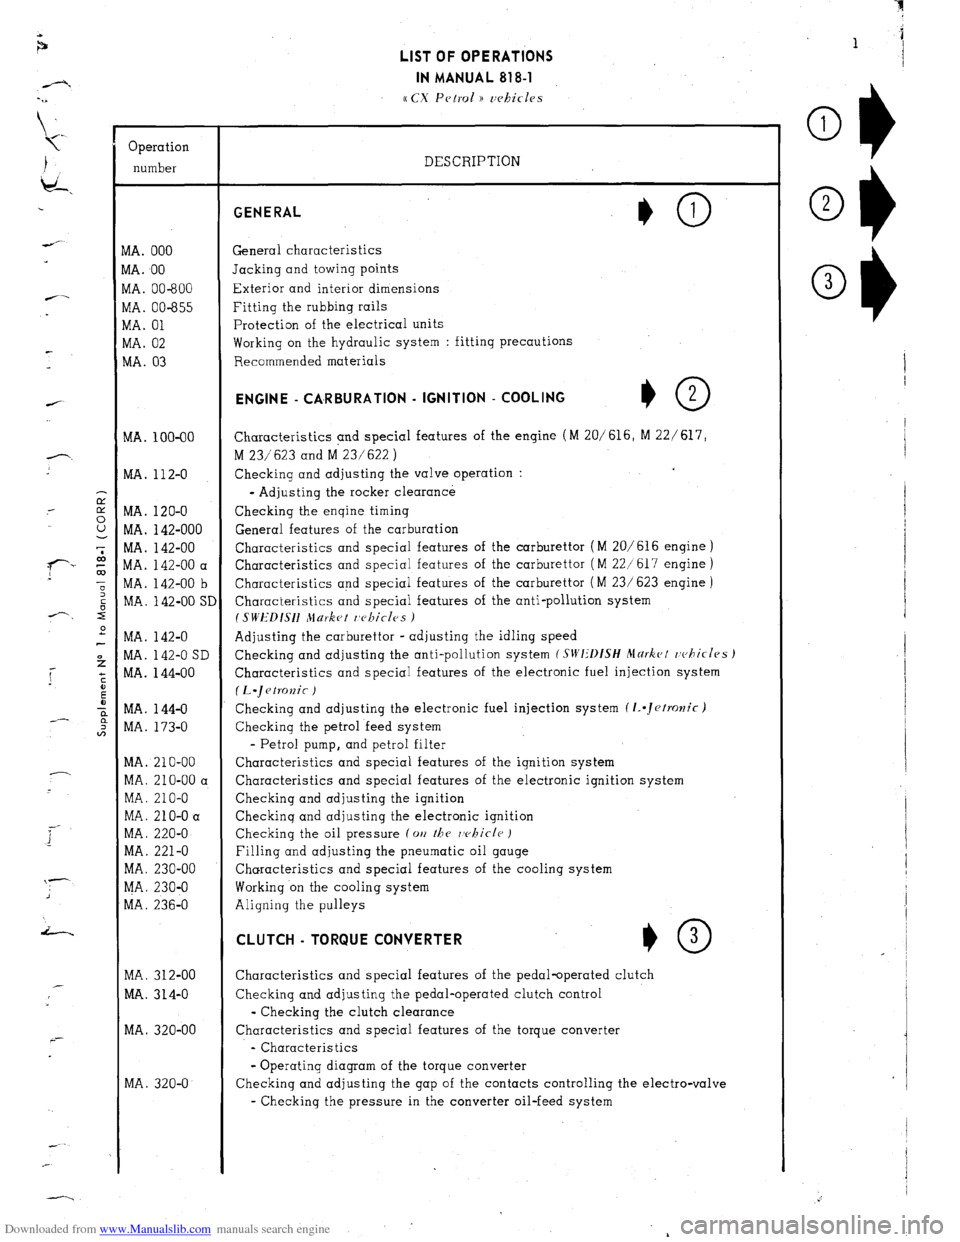 Citroen CX 1978 1.G Workshop Manual Downloaded from www.Manualslib.com manuals search engine Operation 
number 
VIA. 000 
VIA. 00 
VIA. 00-600 
vlA. 00-655 
VIA. 01 
WA. 02 
MA. 03 
MA. 100-00 
MA. 112-O 
MA. 120-O 
MA. 142-000 
MA. 142